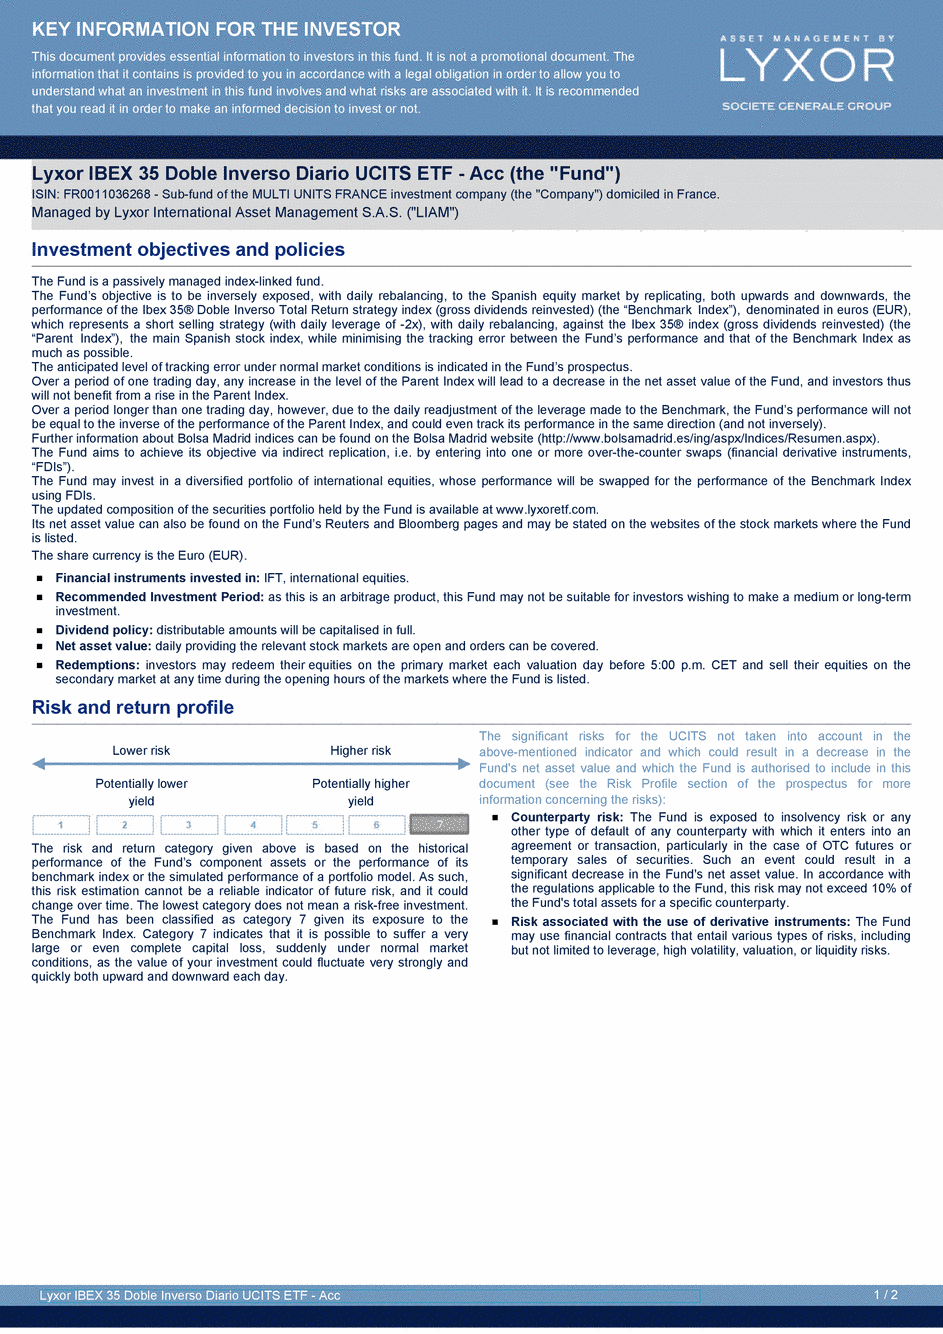 DICI Lyxor IBEX 35 Doble Inverso Diario UCITS ETF - Acc - 19/02/2020 - Anglais